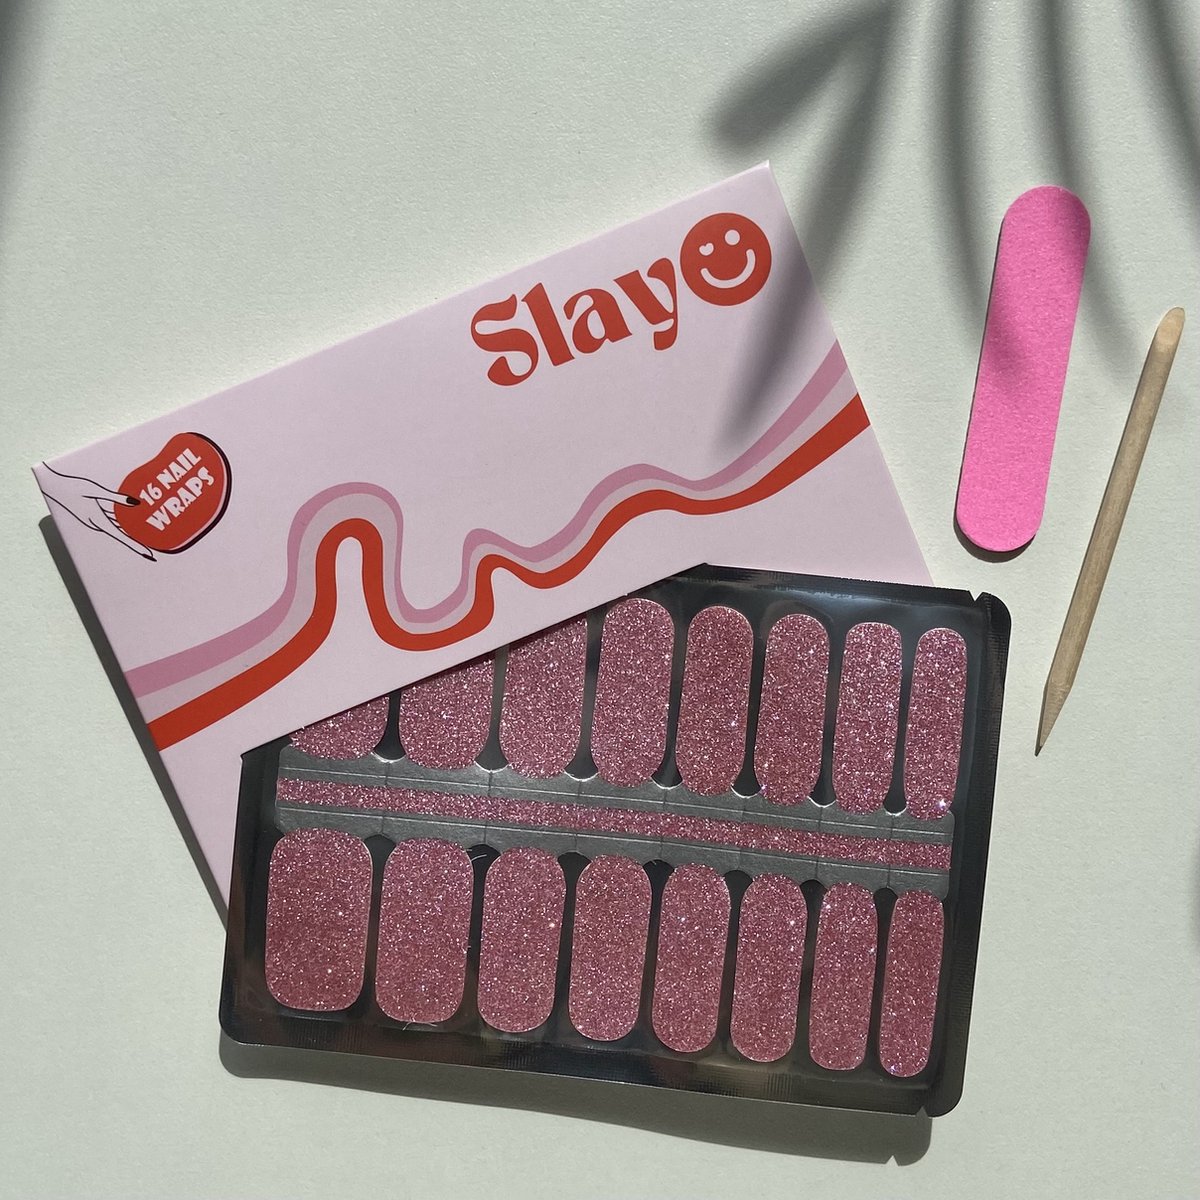 Slayo© - Nagelstickers - Pinkalicious Pop - Nail Wraps - Nagel Stickers - Nail Art - GEEN lamp nodig